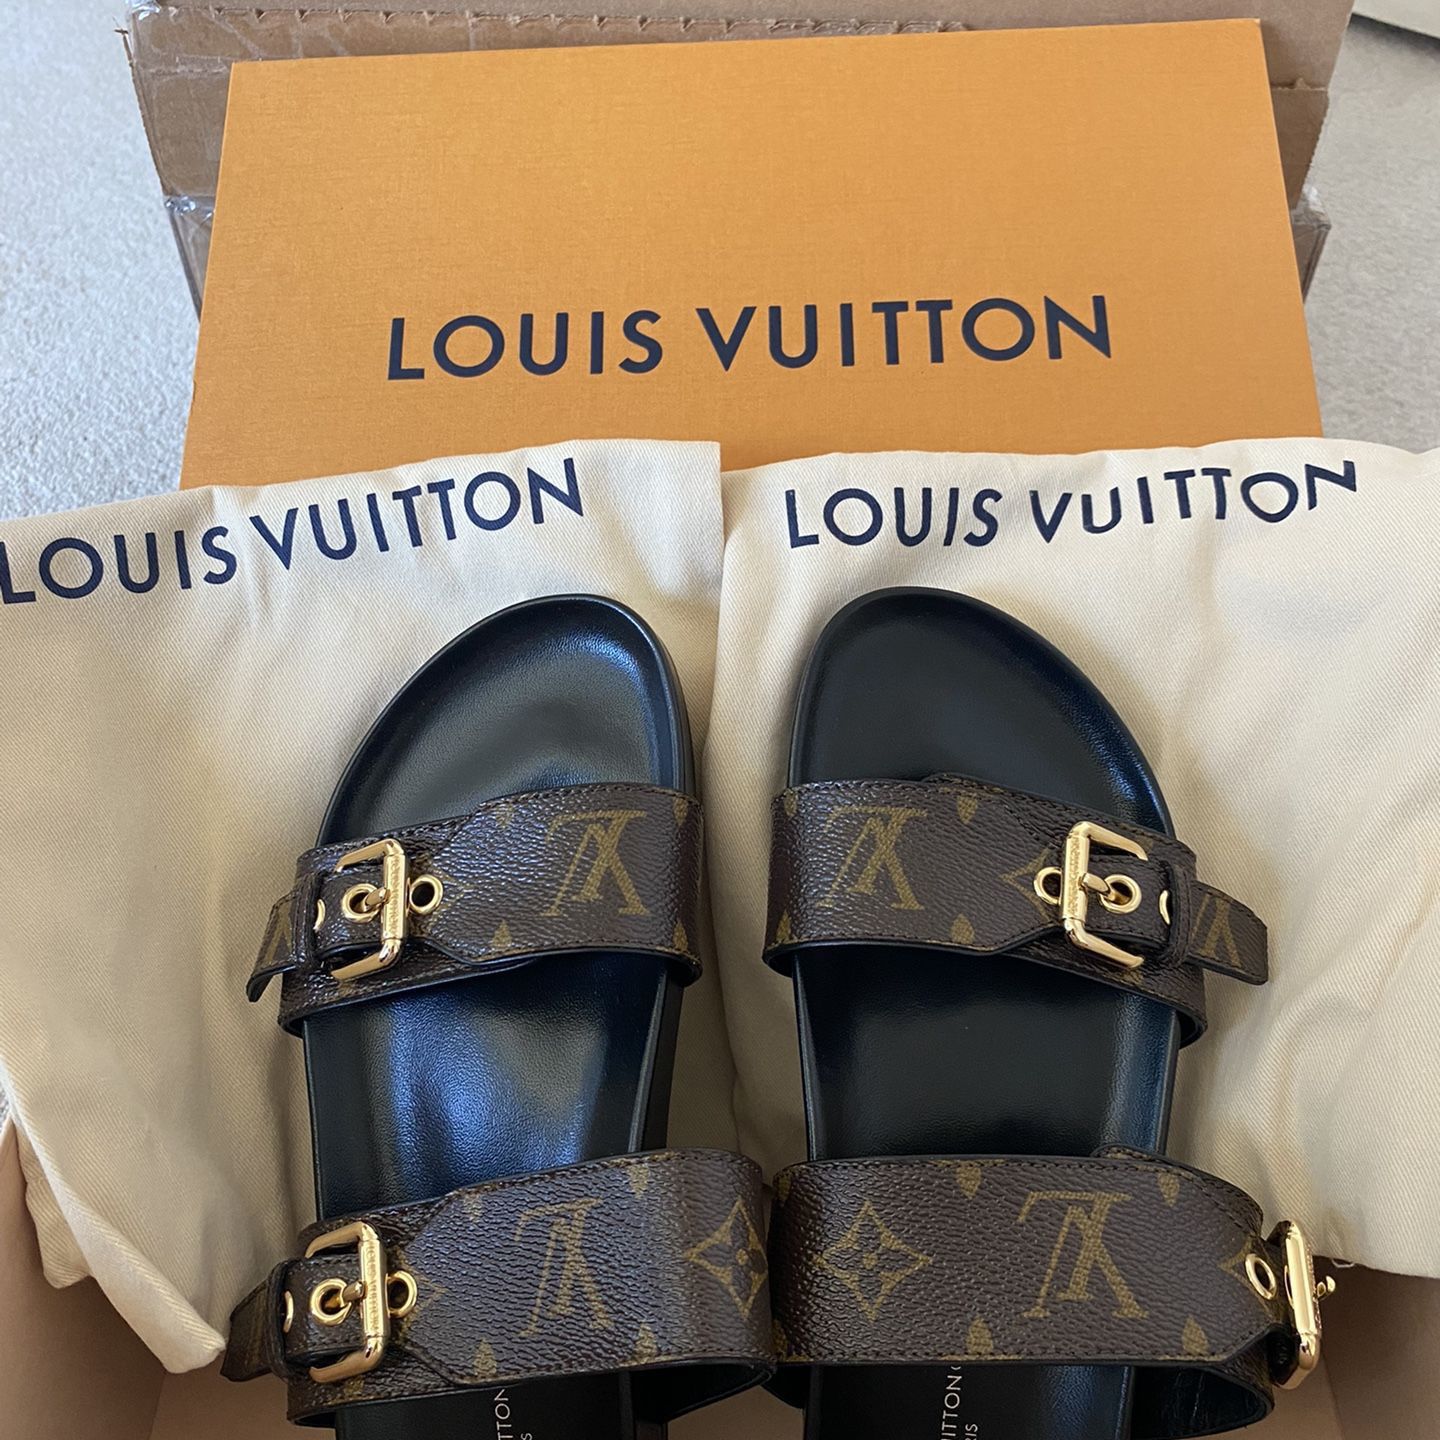 LV Louis Vuitton Bom Dia Flat Comfort Mule Sandals for Sale in